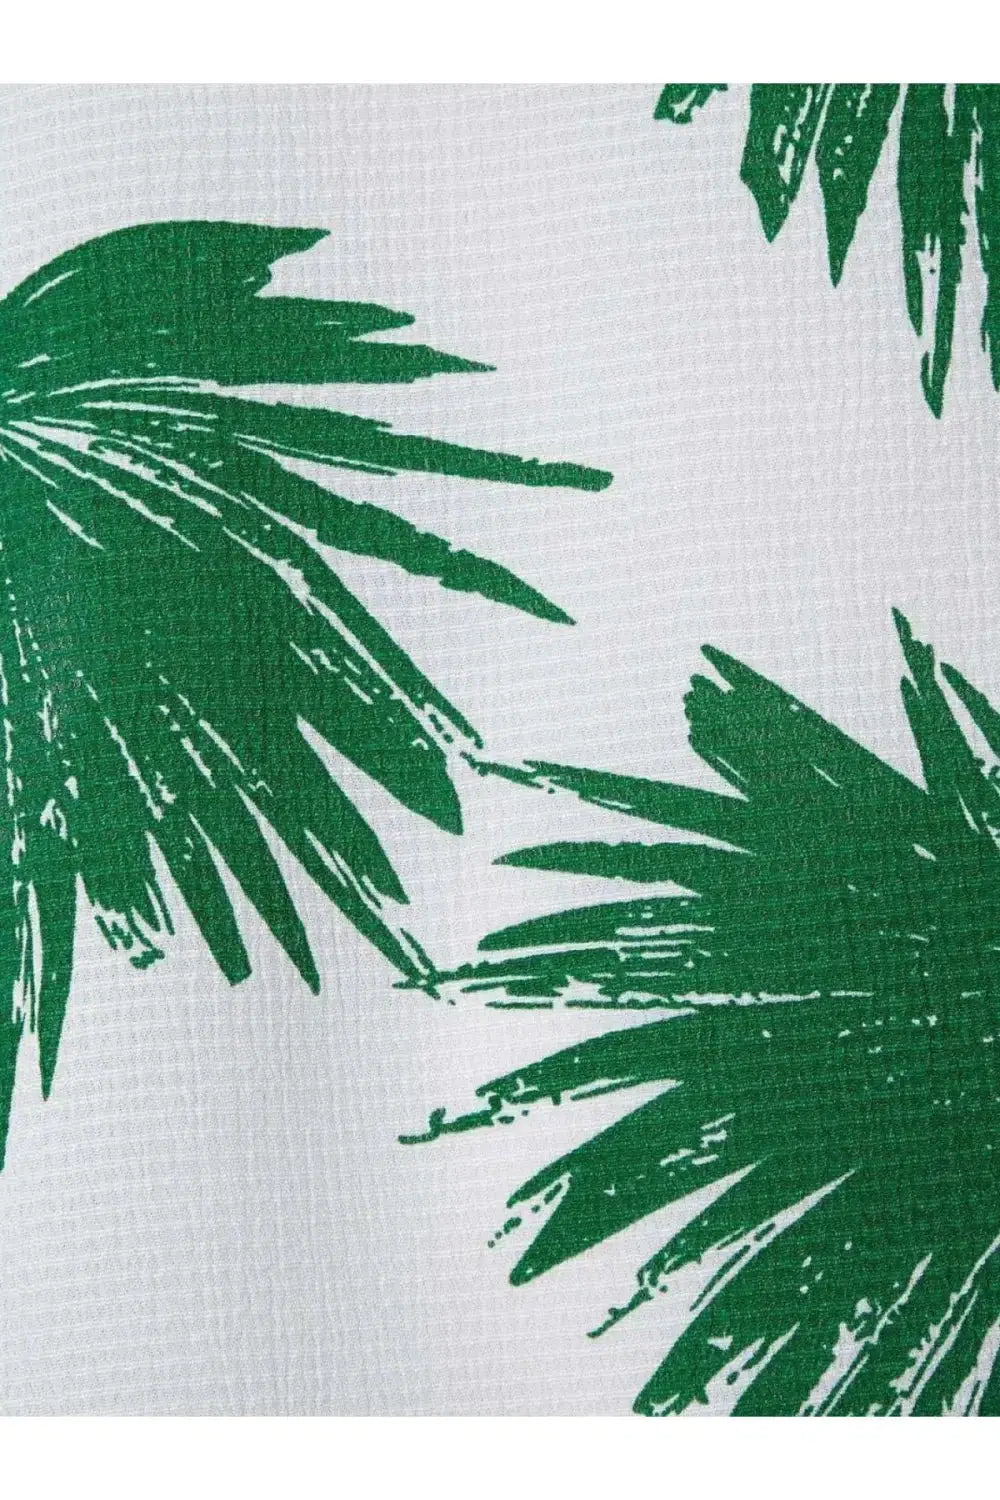 White Stuff Palm Print Tunic Top